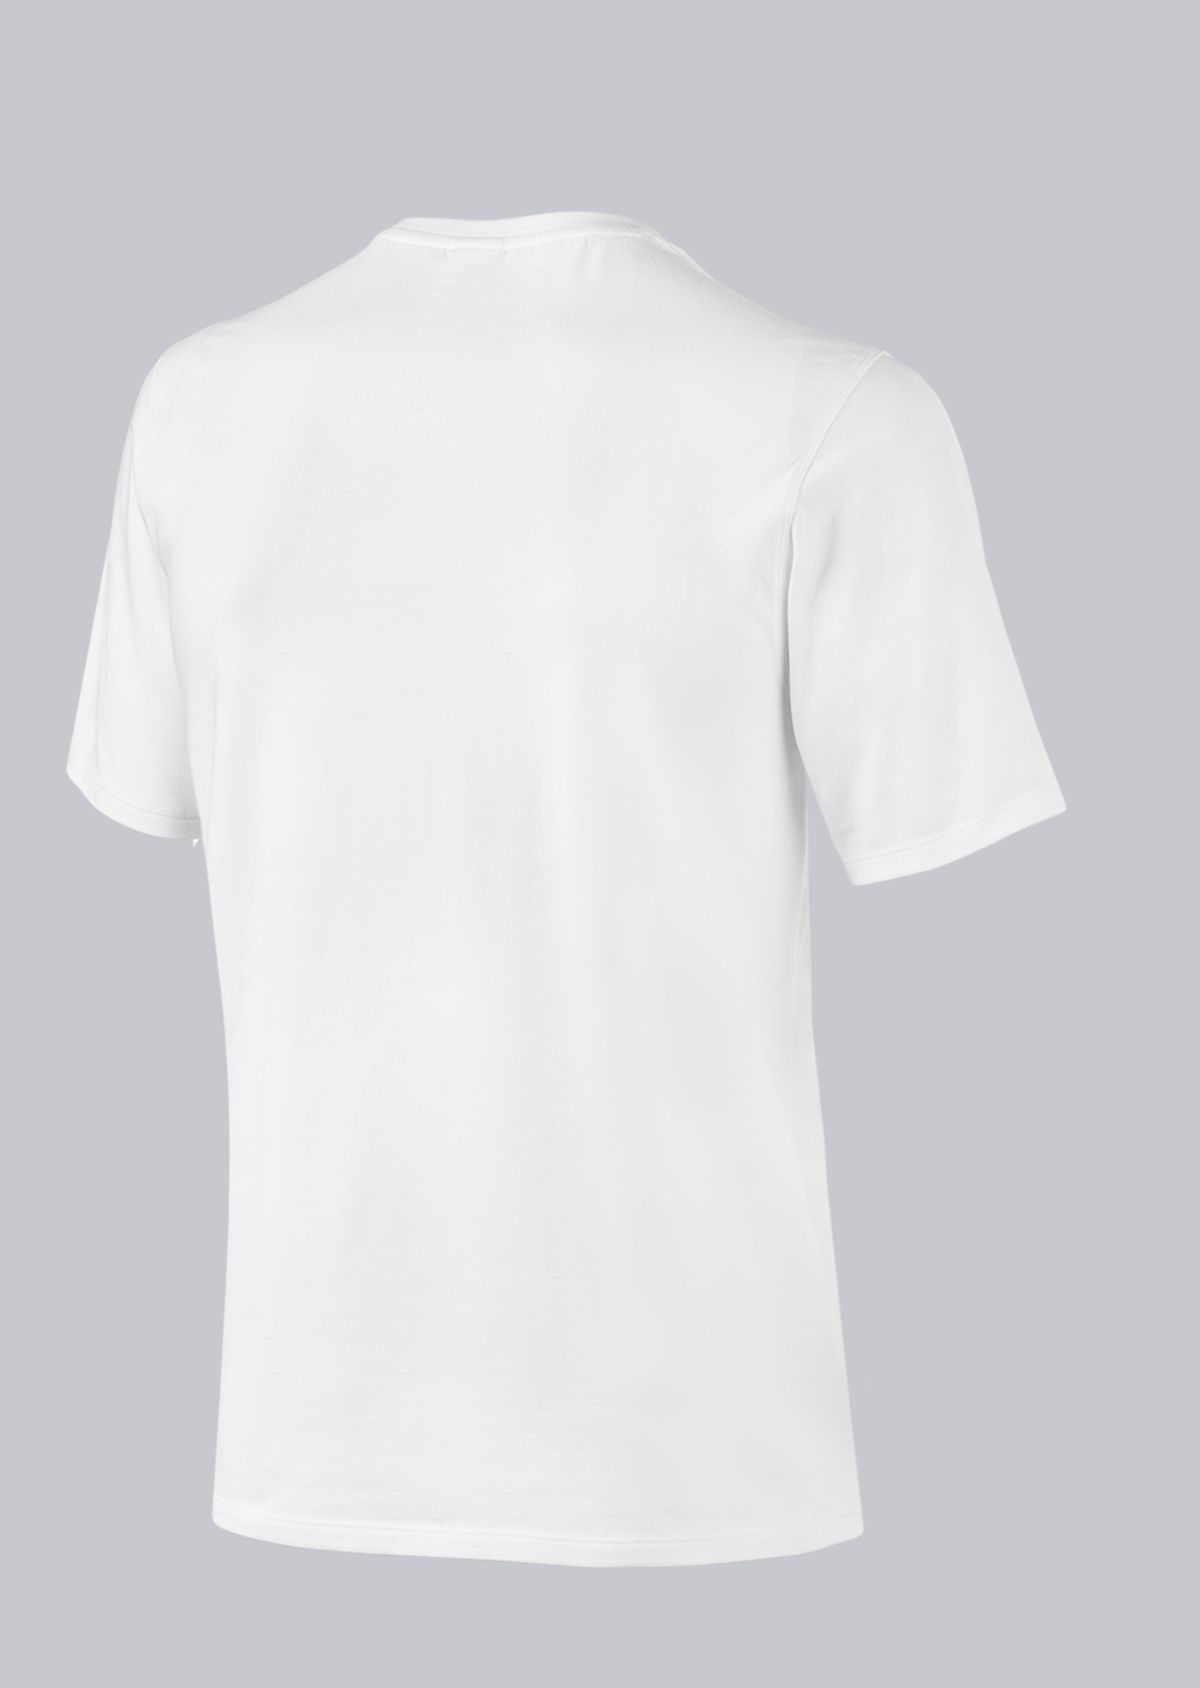 BP® T-Shirt unisexe